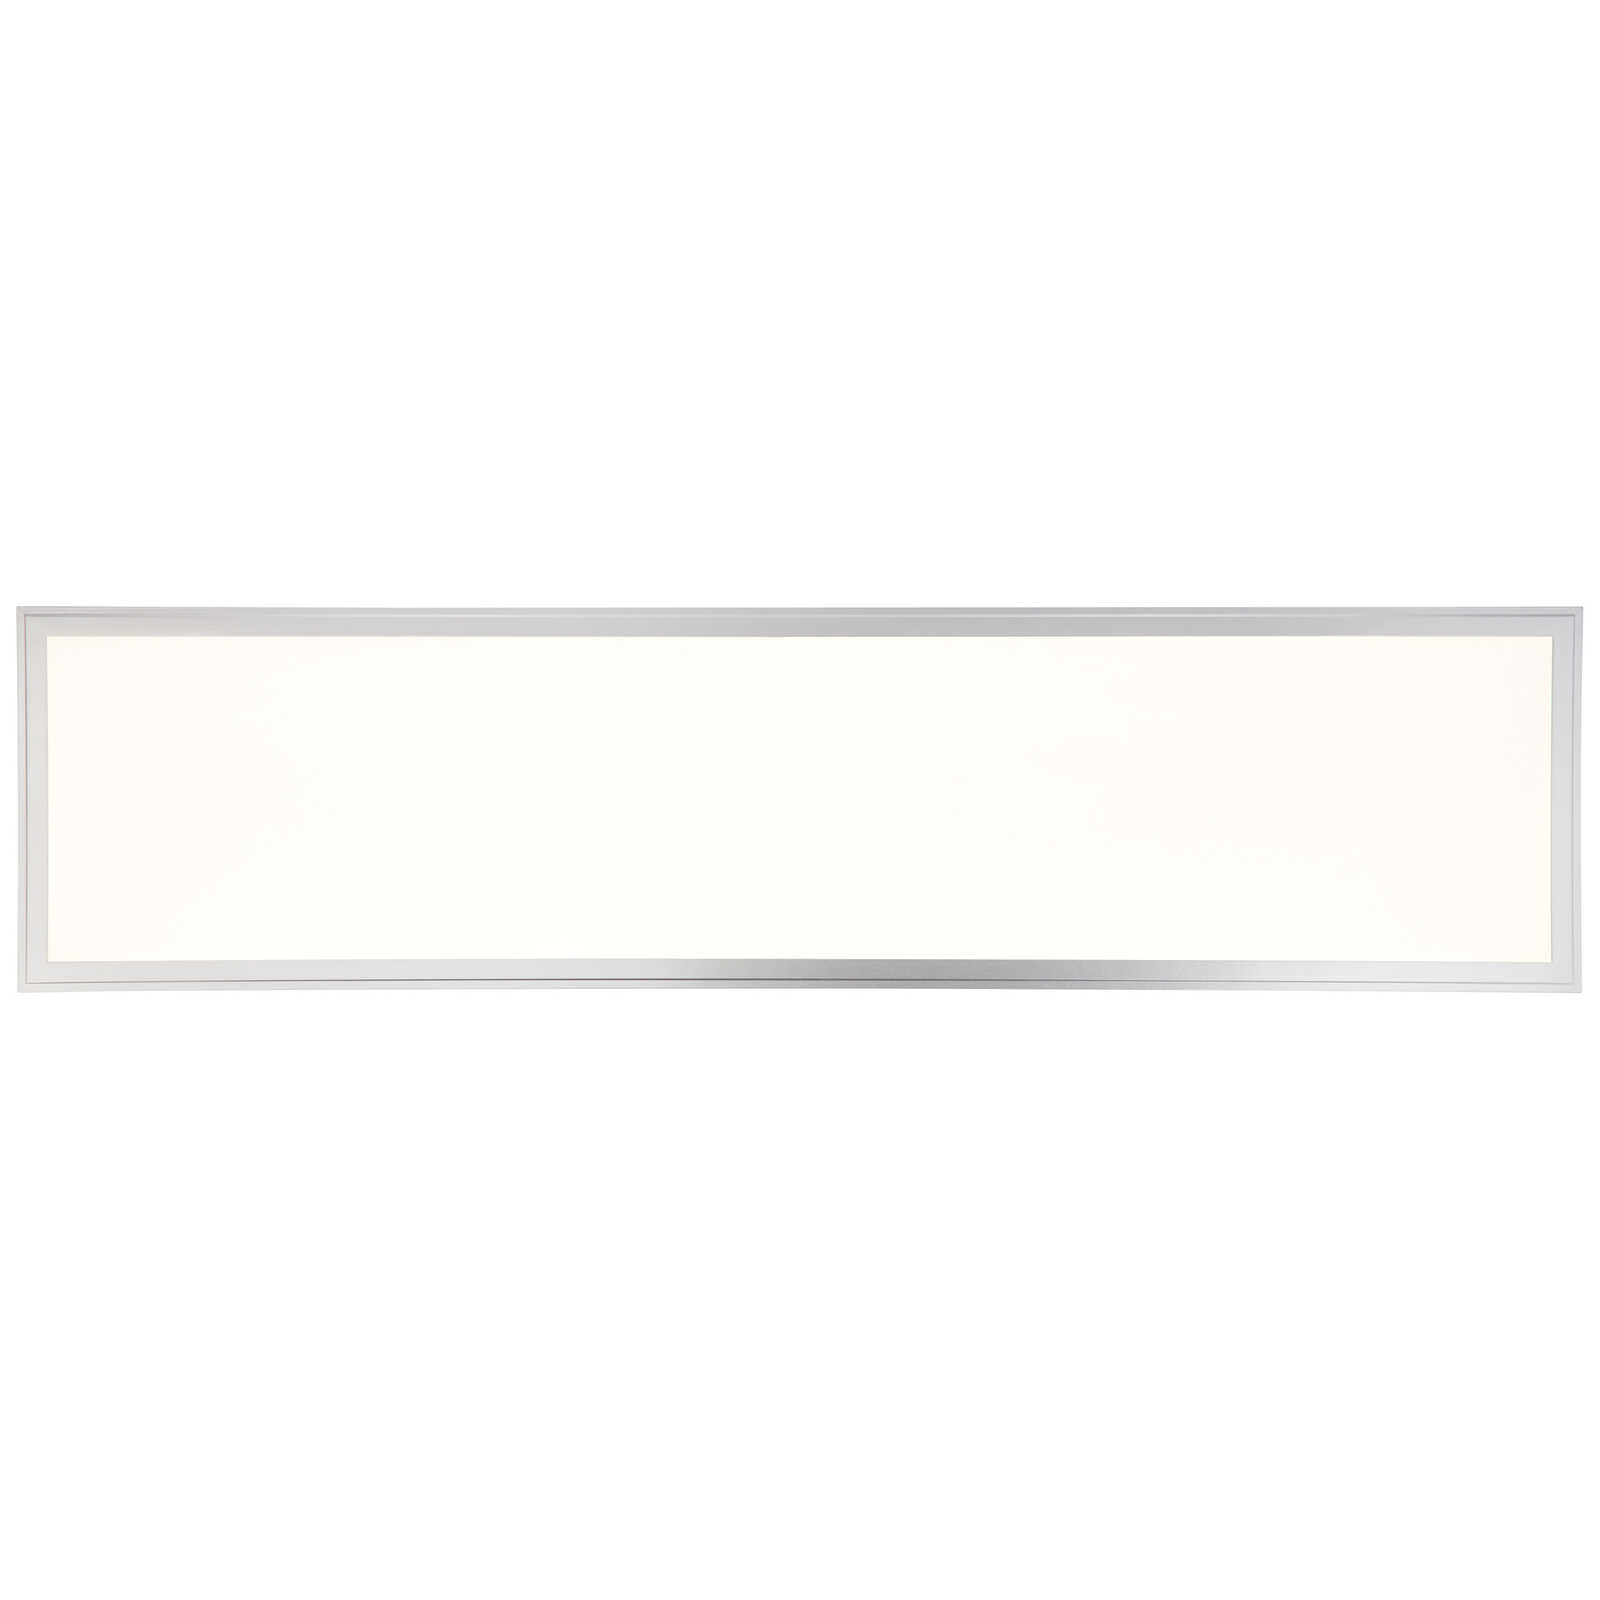             Metal ceiling light - Alba 3 - silver, white
        